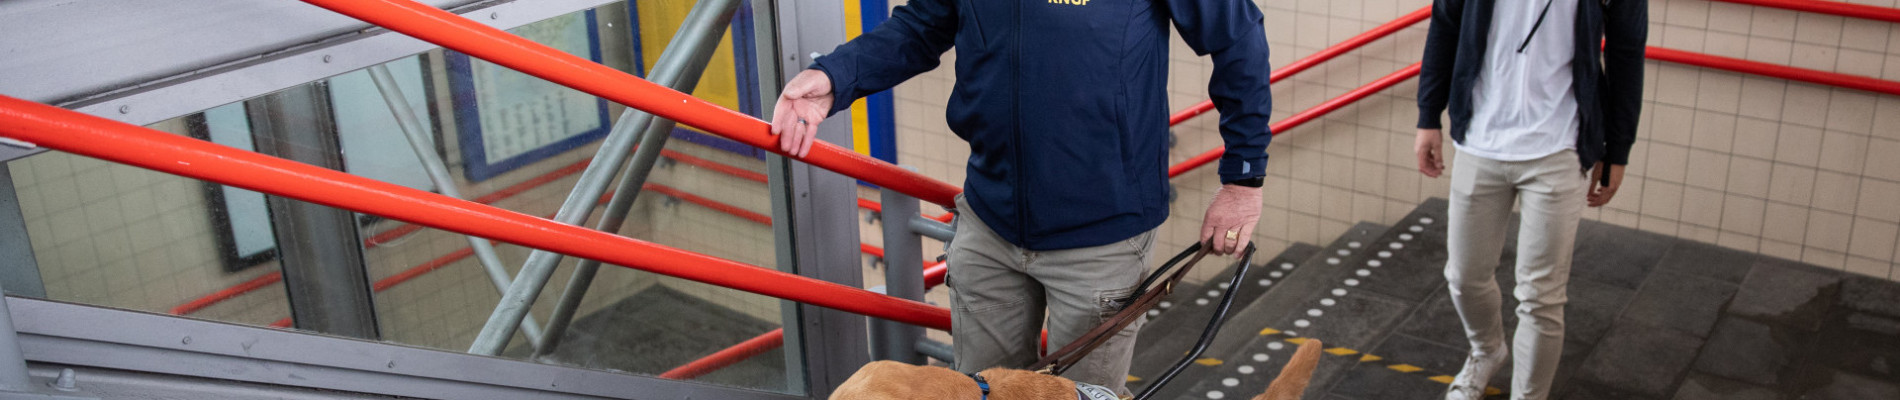 Instructeur Kees loopt met labrador in paars kngf-tuig op de trap in een metrostation